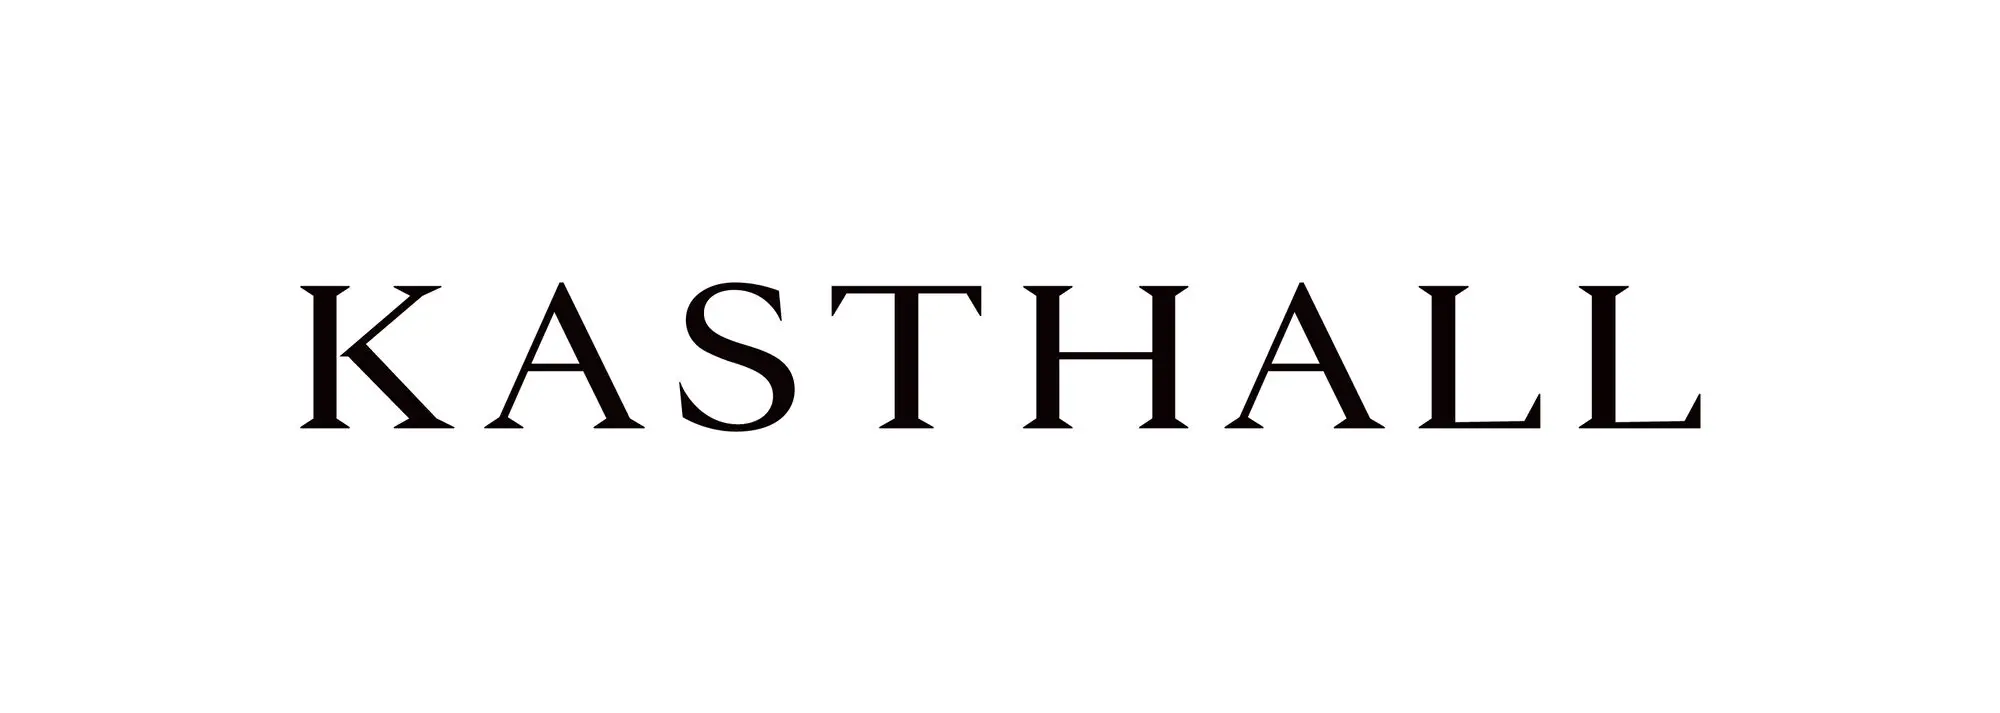 Kasthall Logo